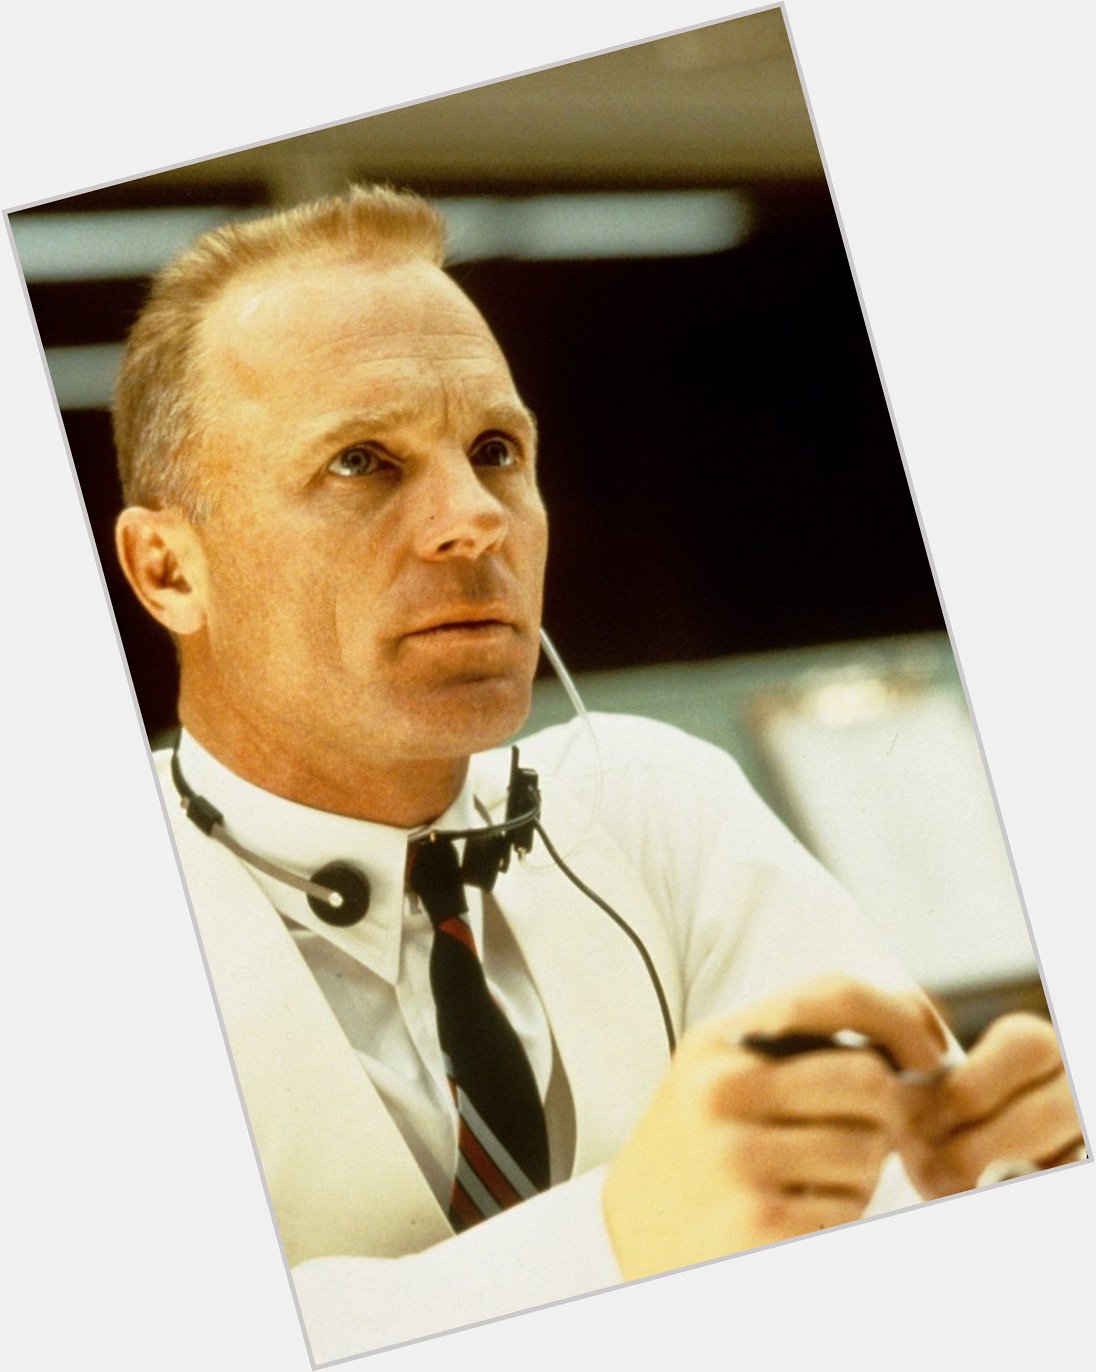 Happy birthday to Ed Harris
Here as Gene Kranz in Apollo 13 